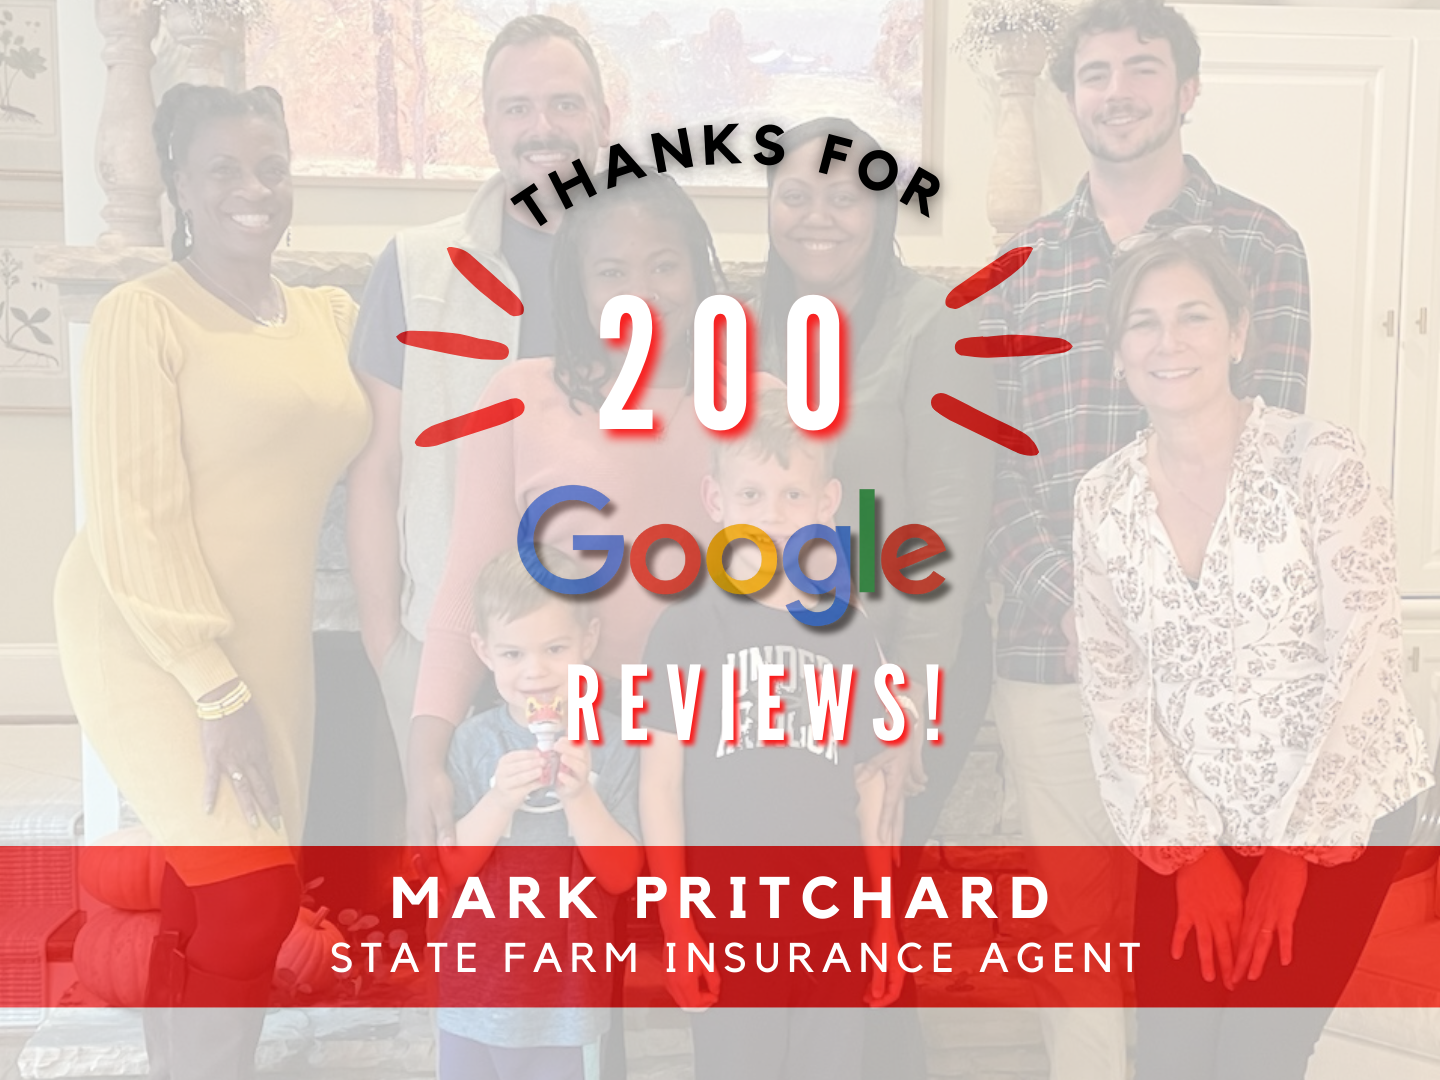 200 Google Reviews! Mark Pritchard - State Farm Insurance Agent Atlanta (404)856-4950